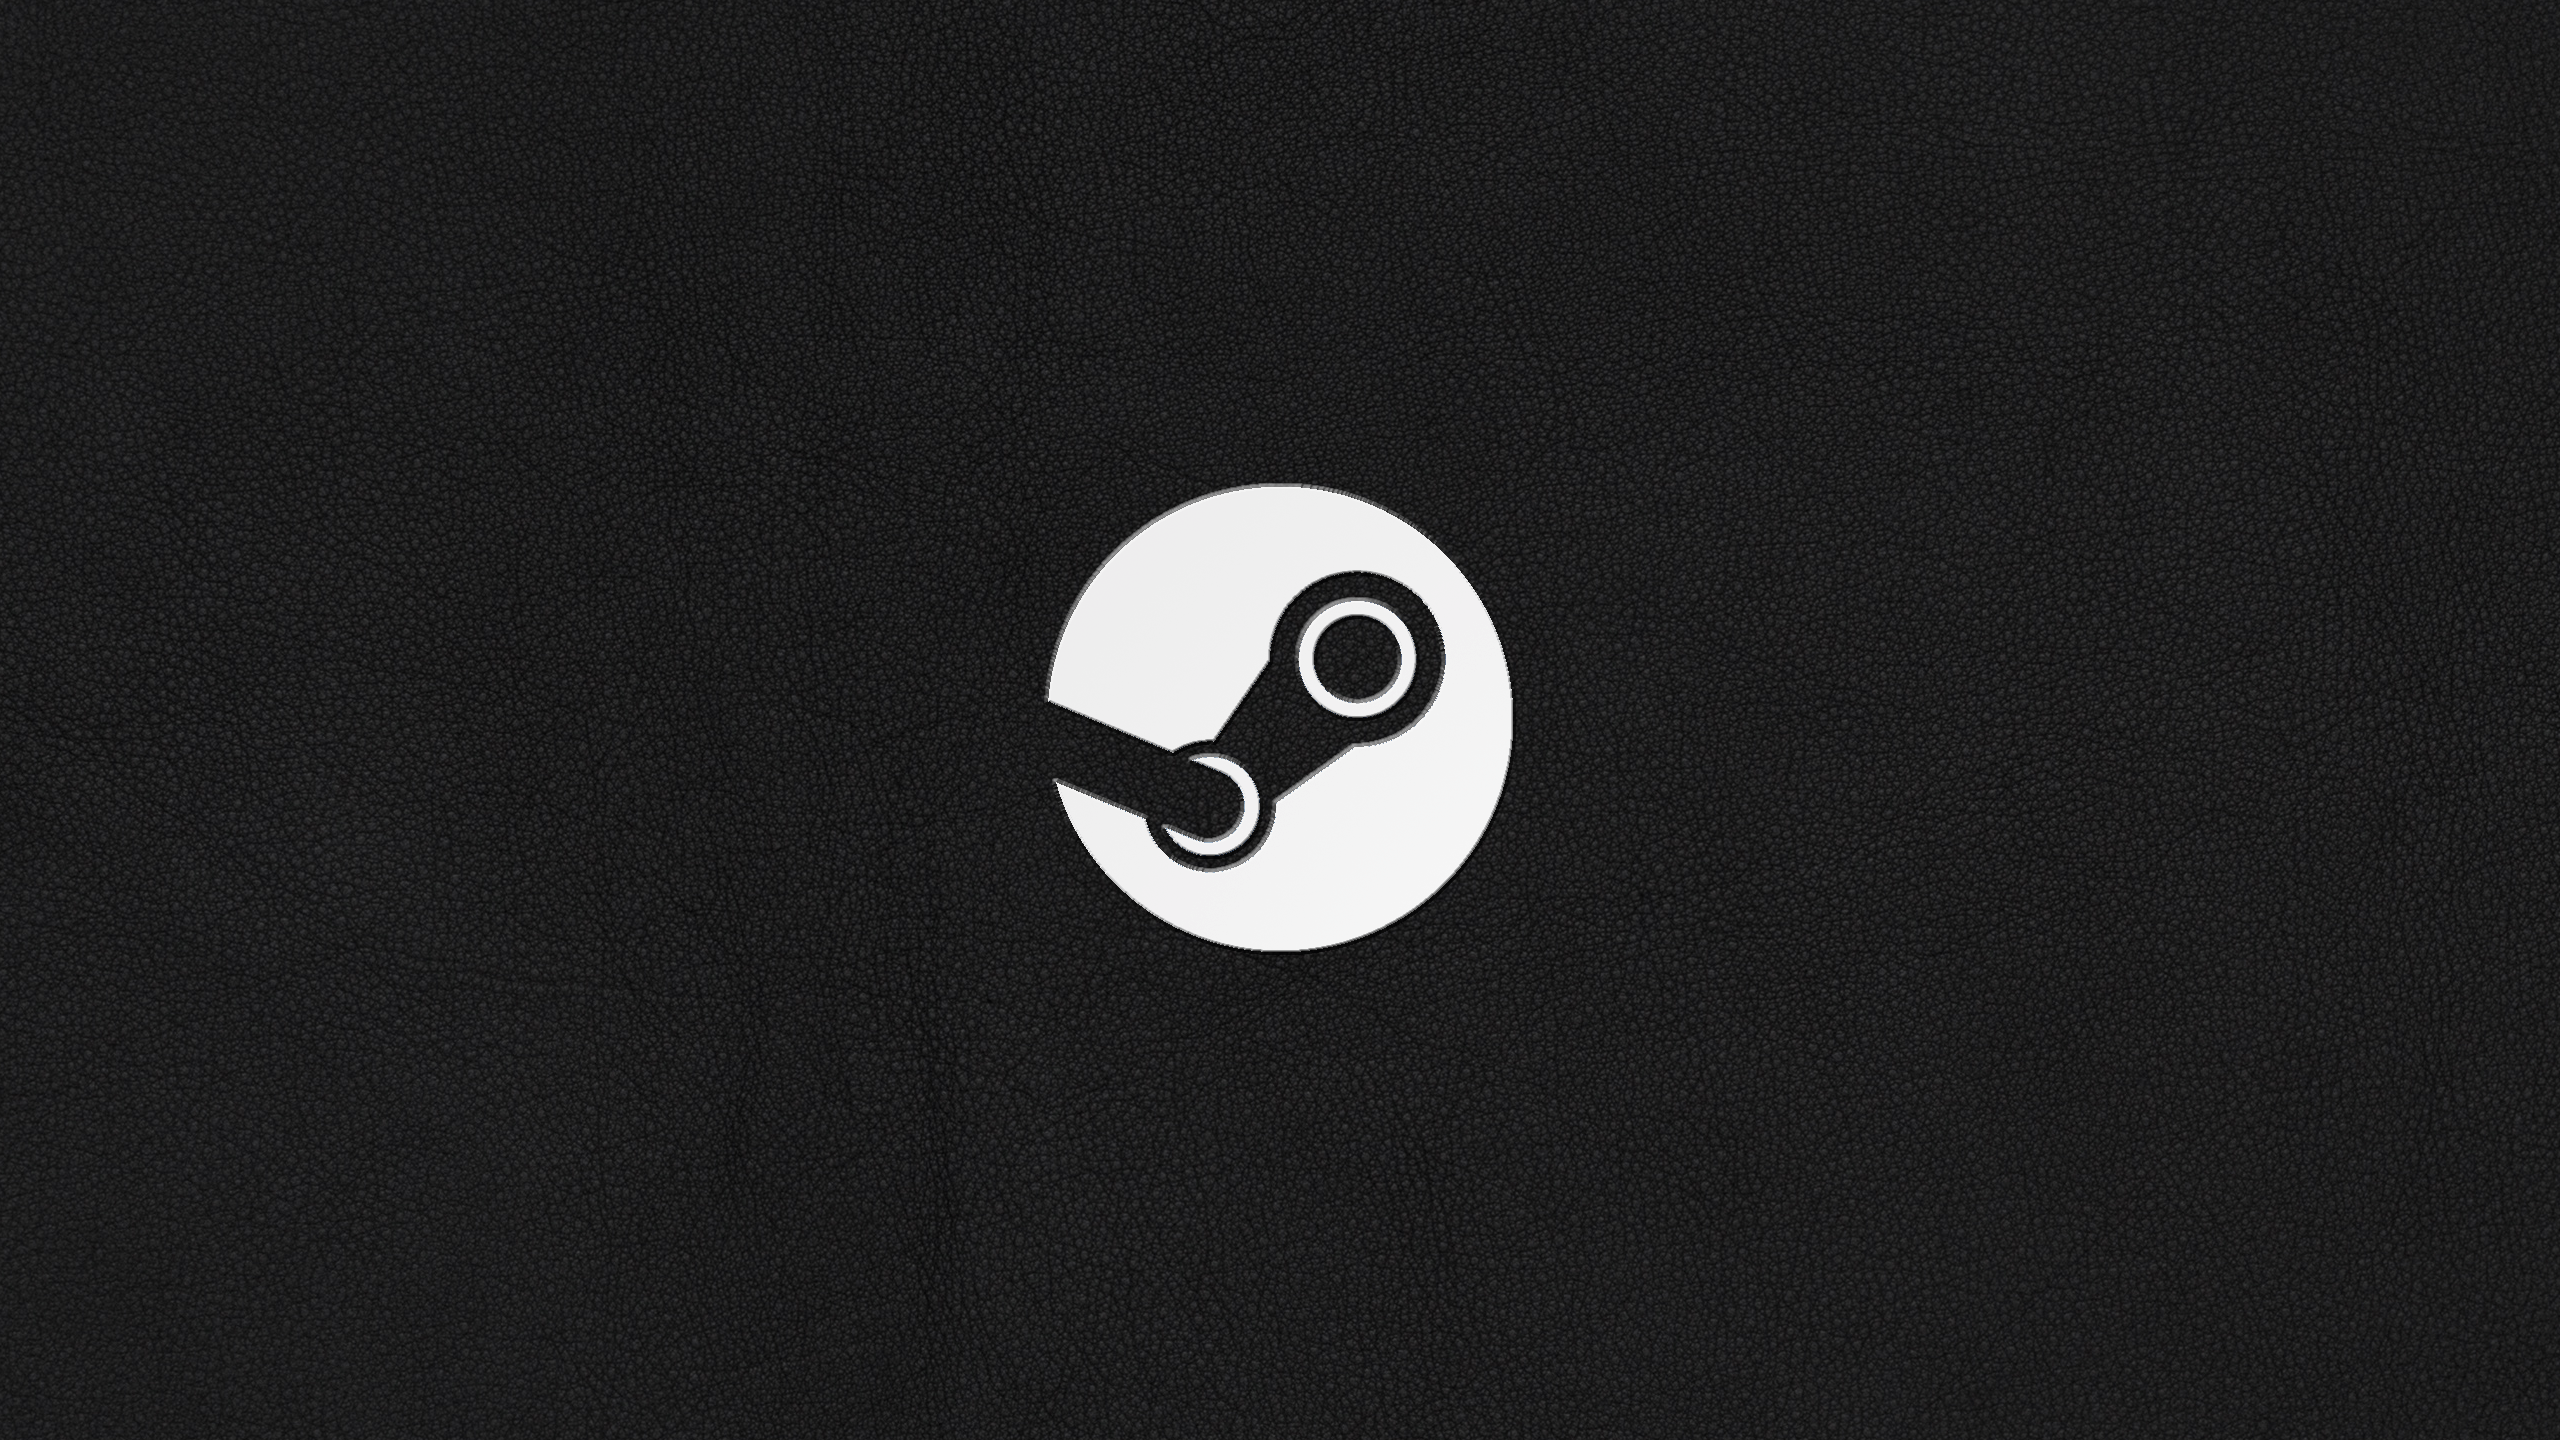 Steam Logo Wallpaper